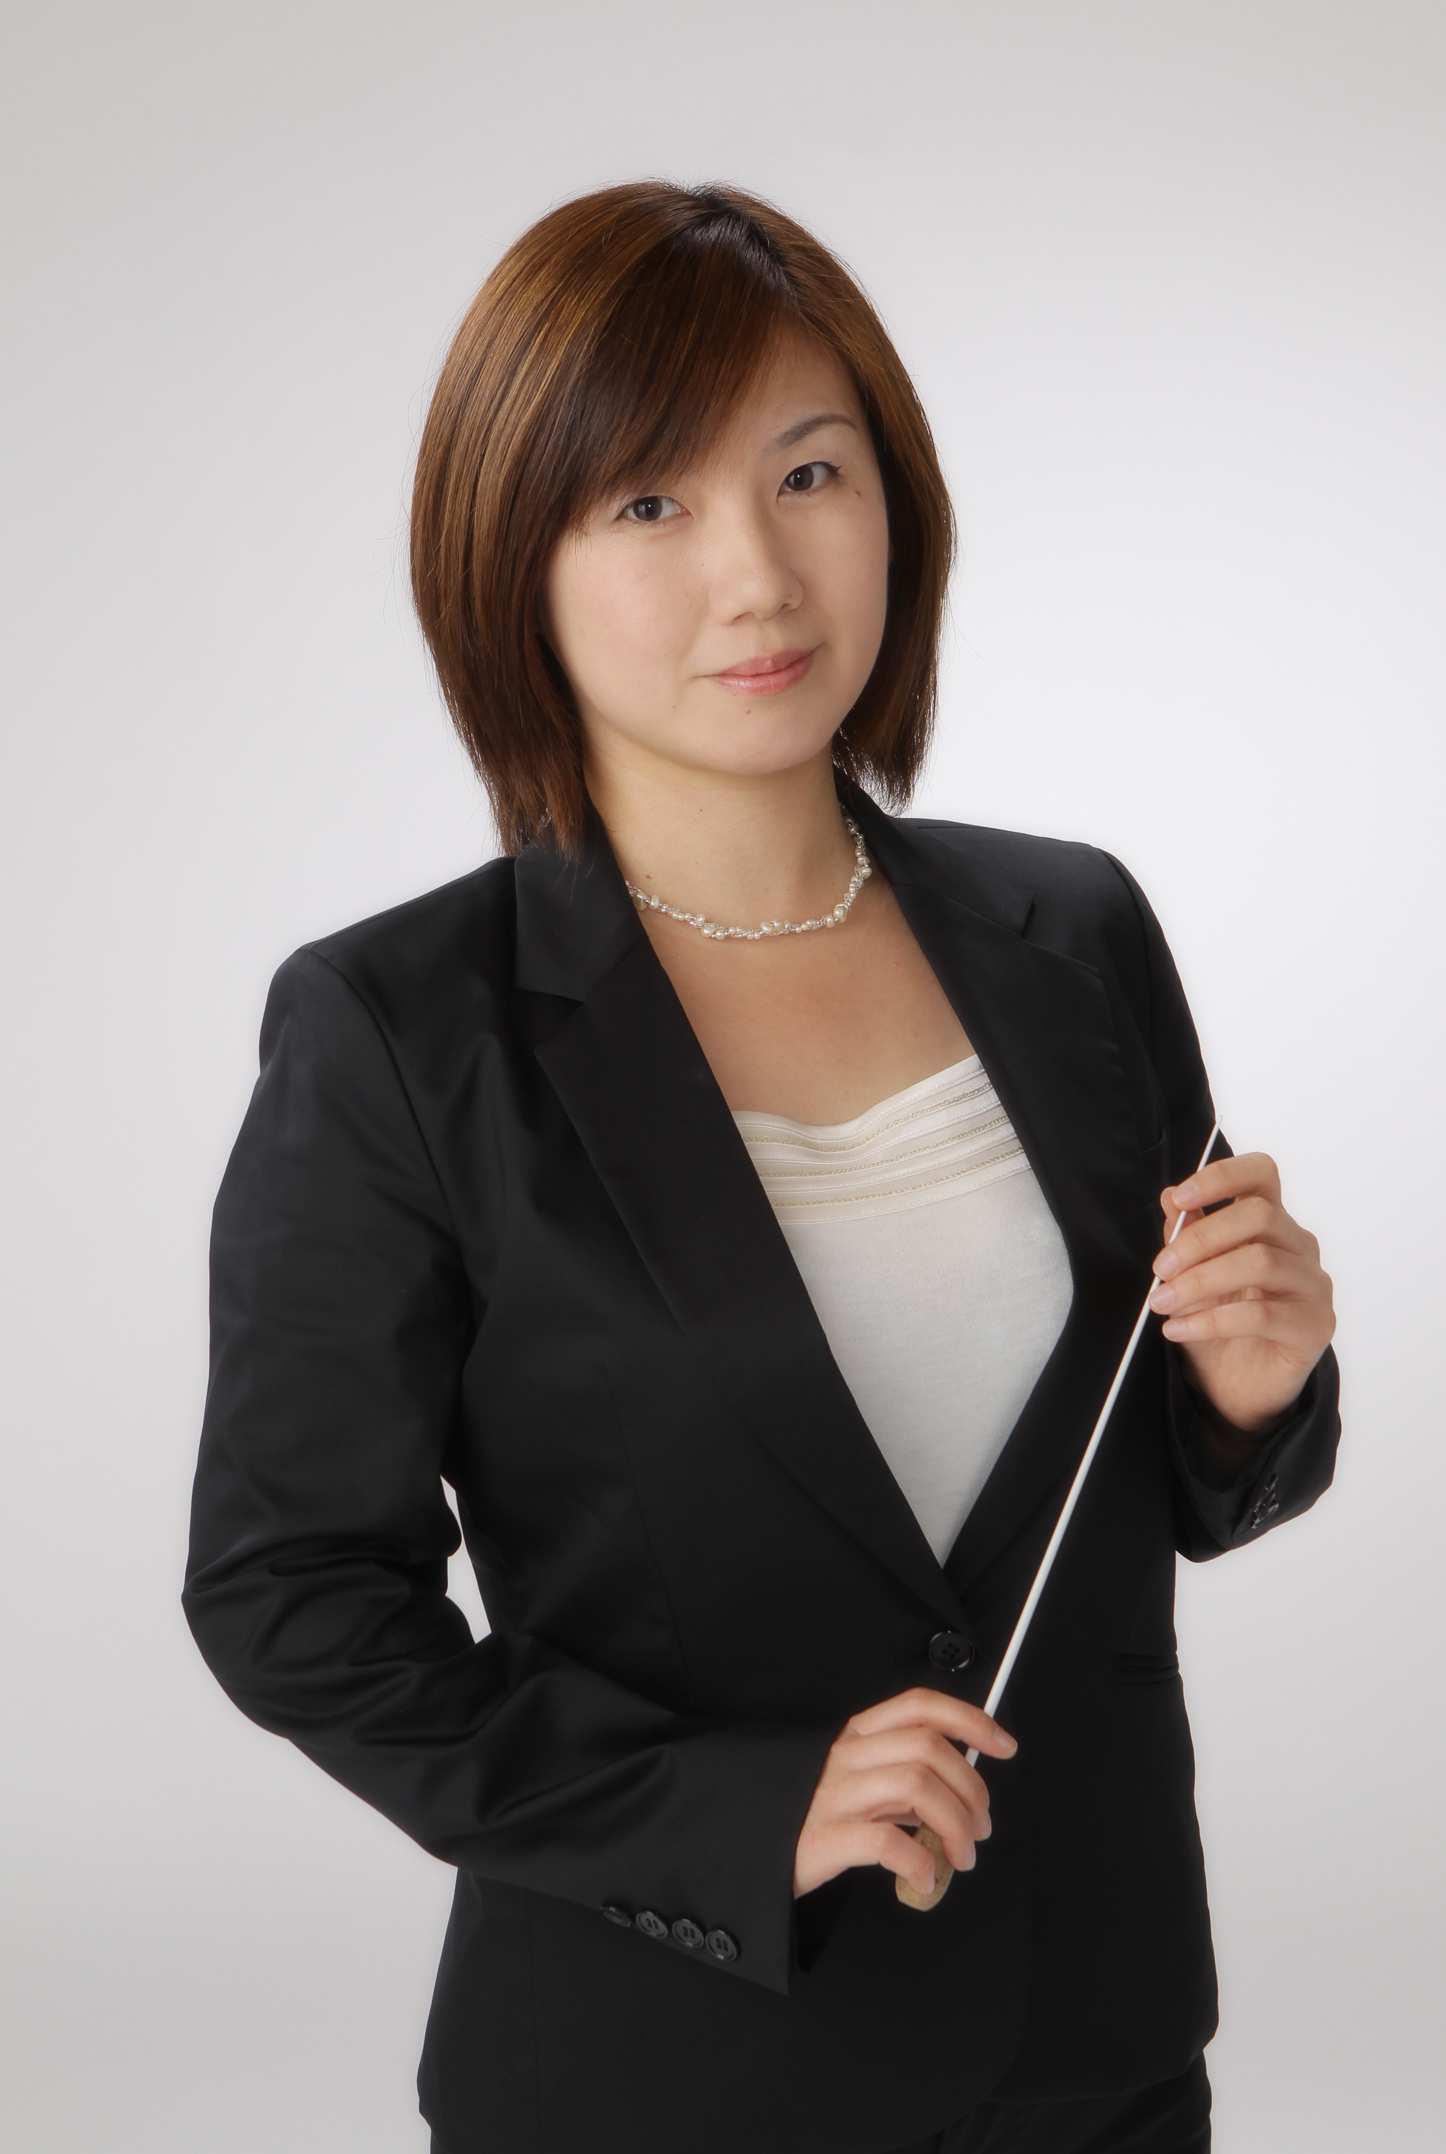 Мурманский филармонический оркестр. Дирижер - Нами Фудзисаки, Япония